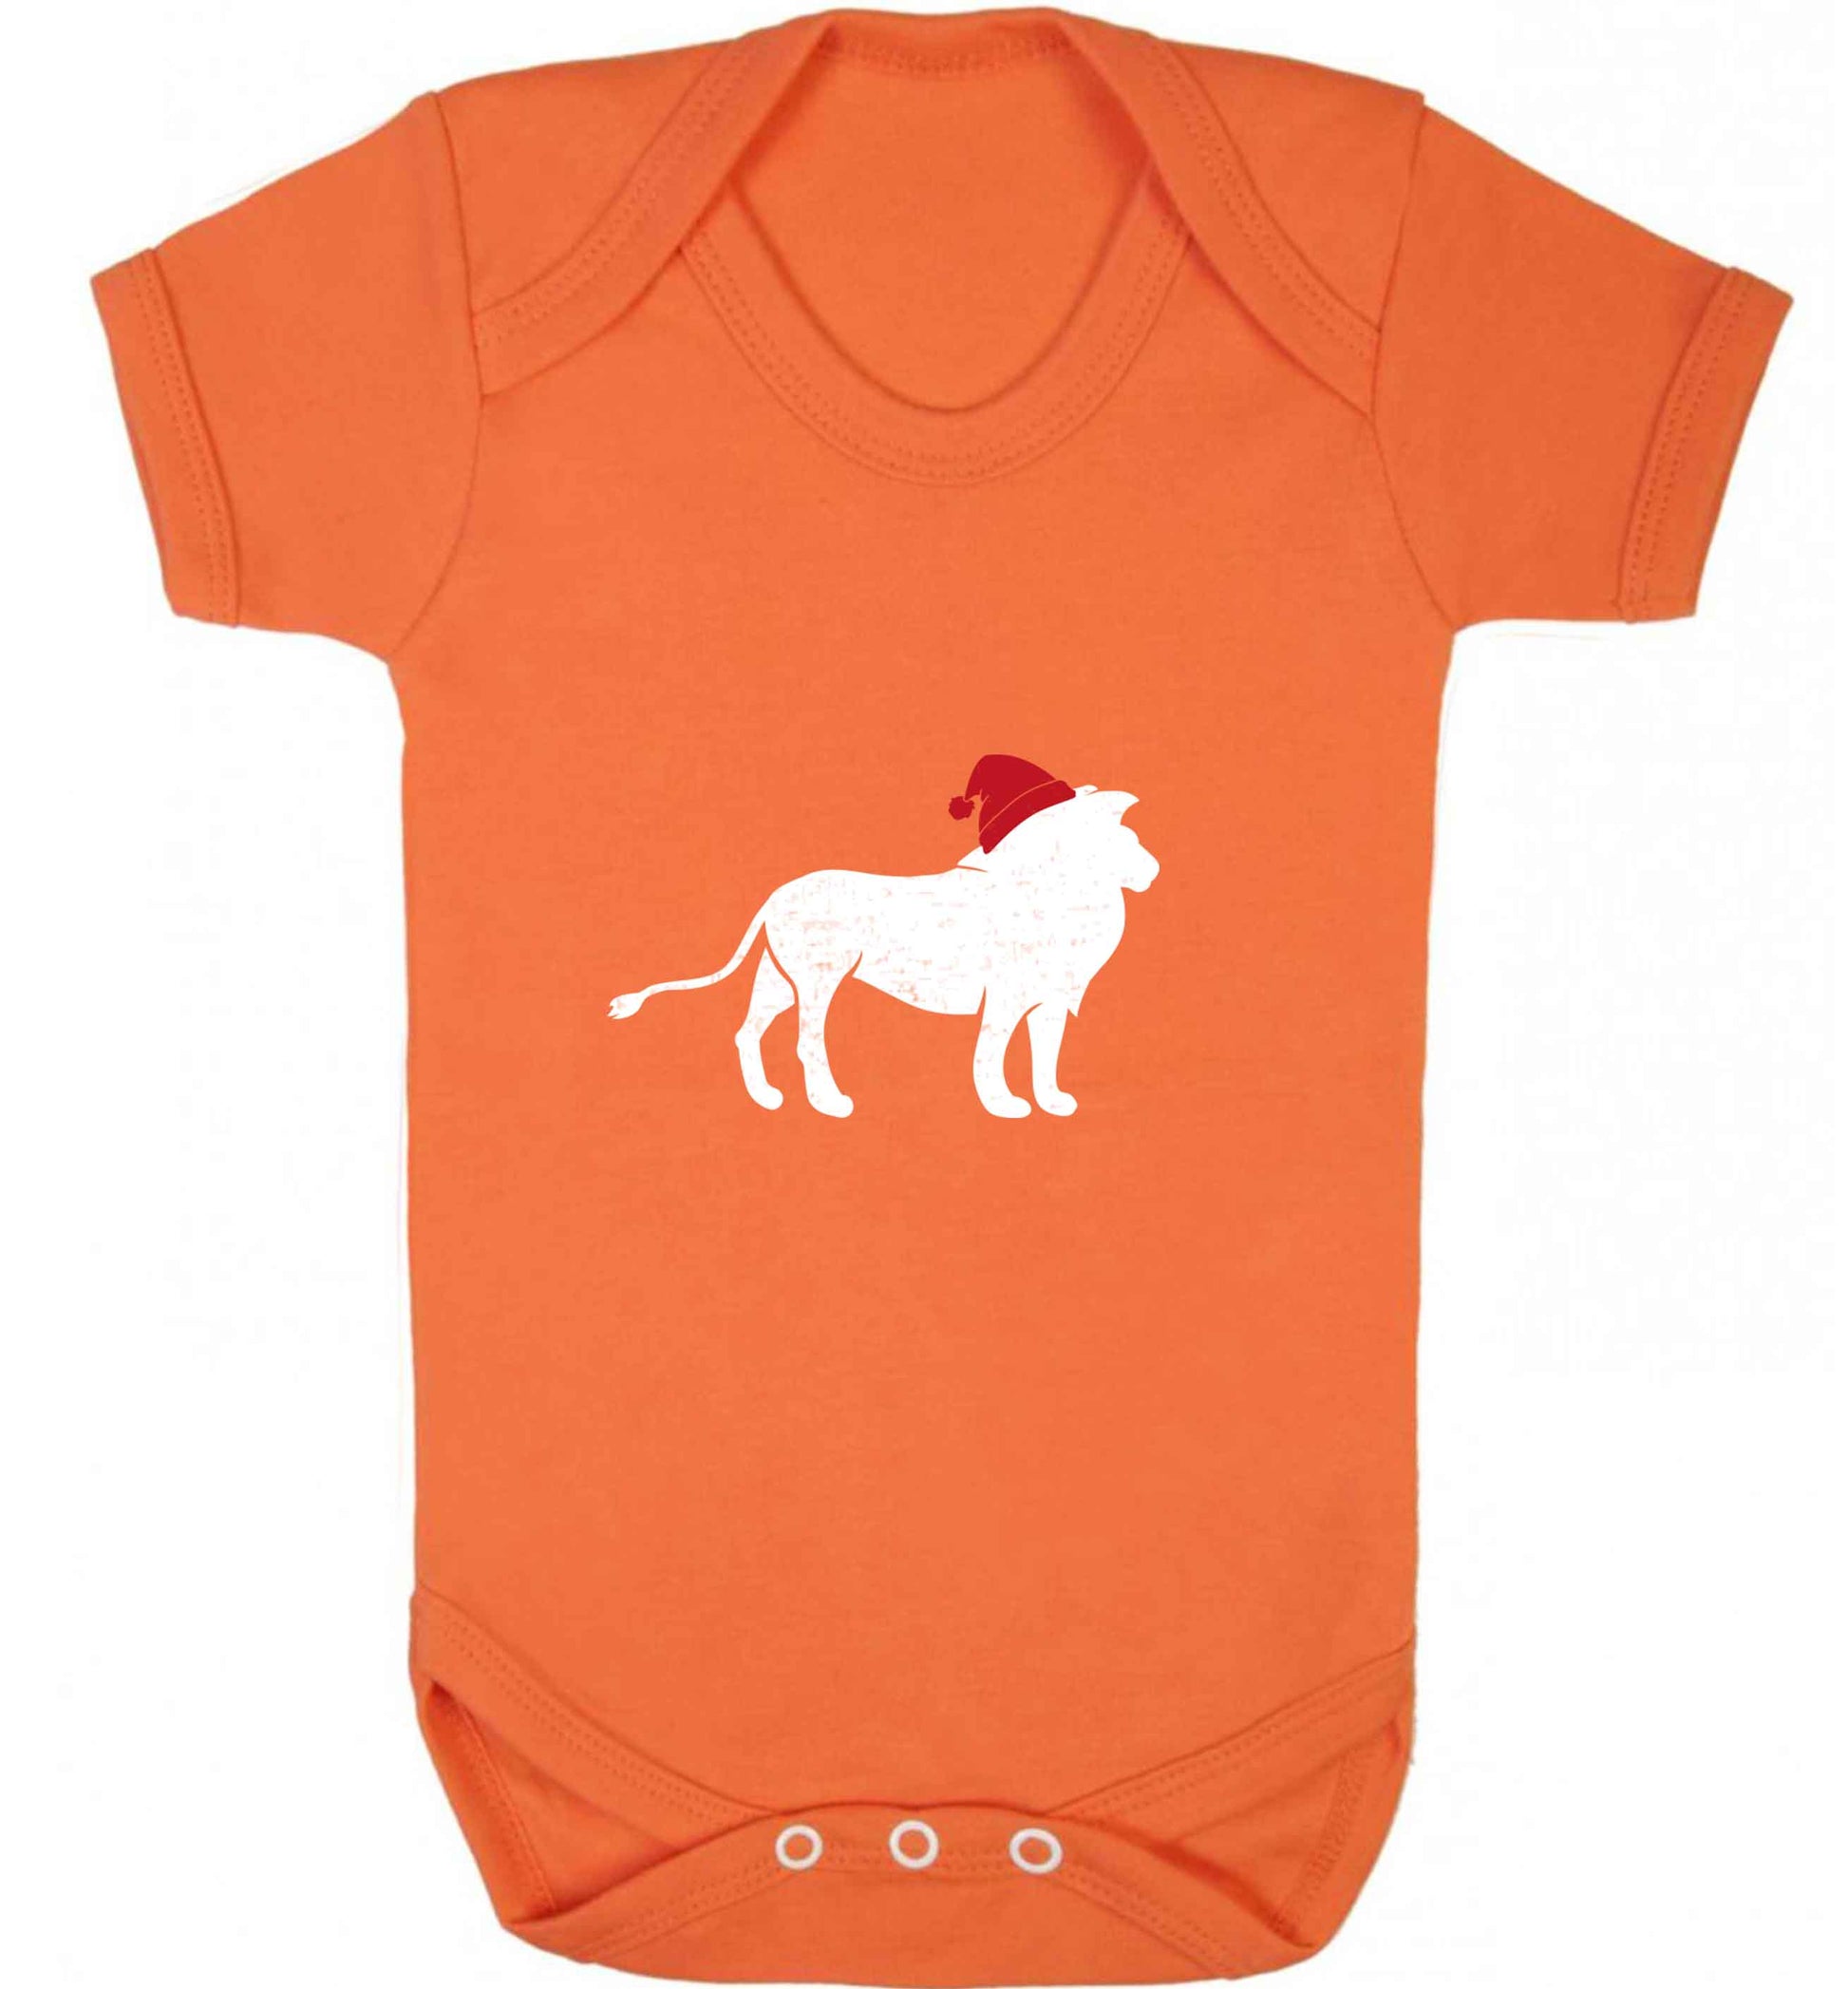 Gold lion santa baby vest orange 18-24 months